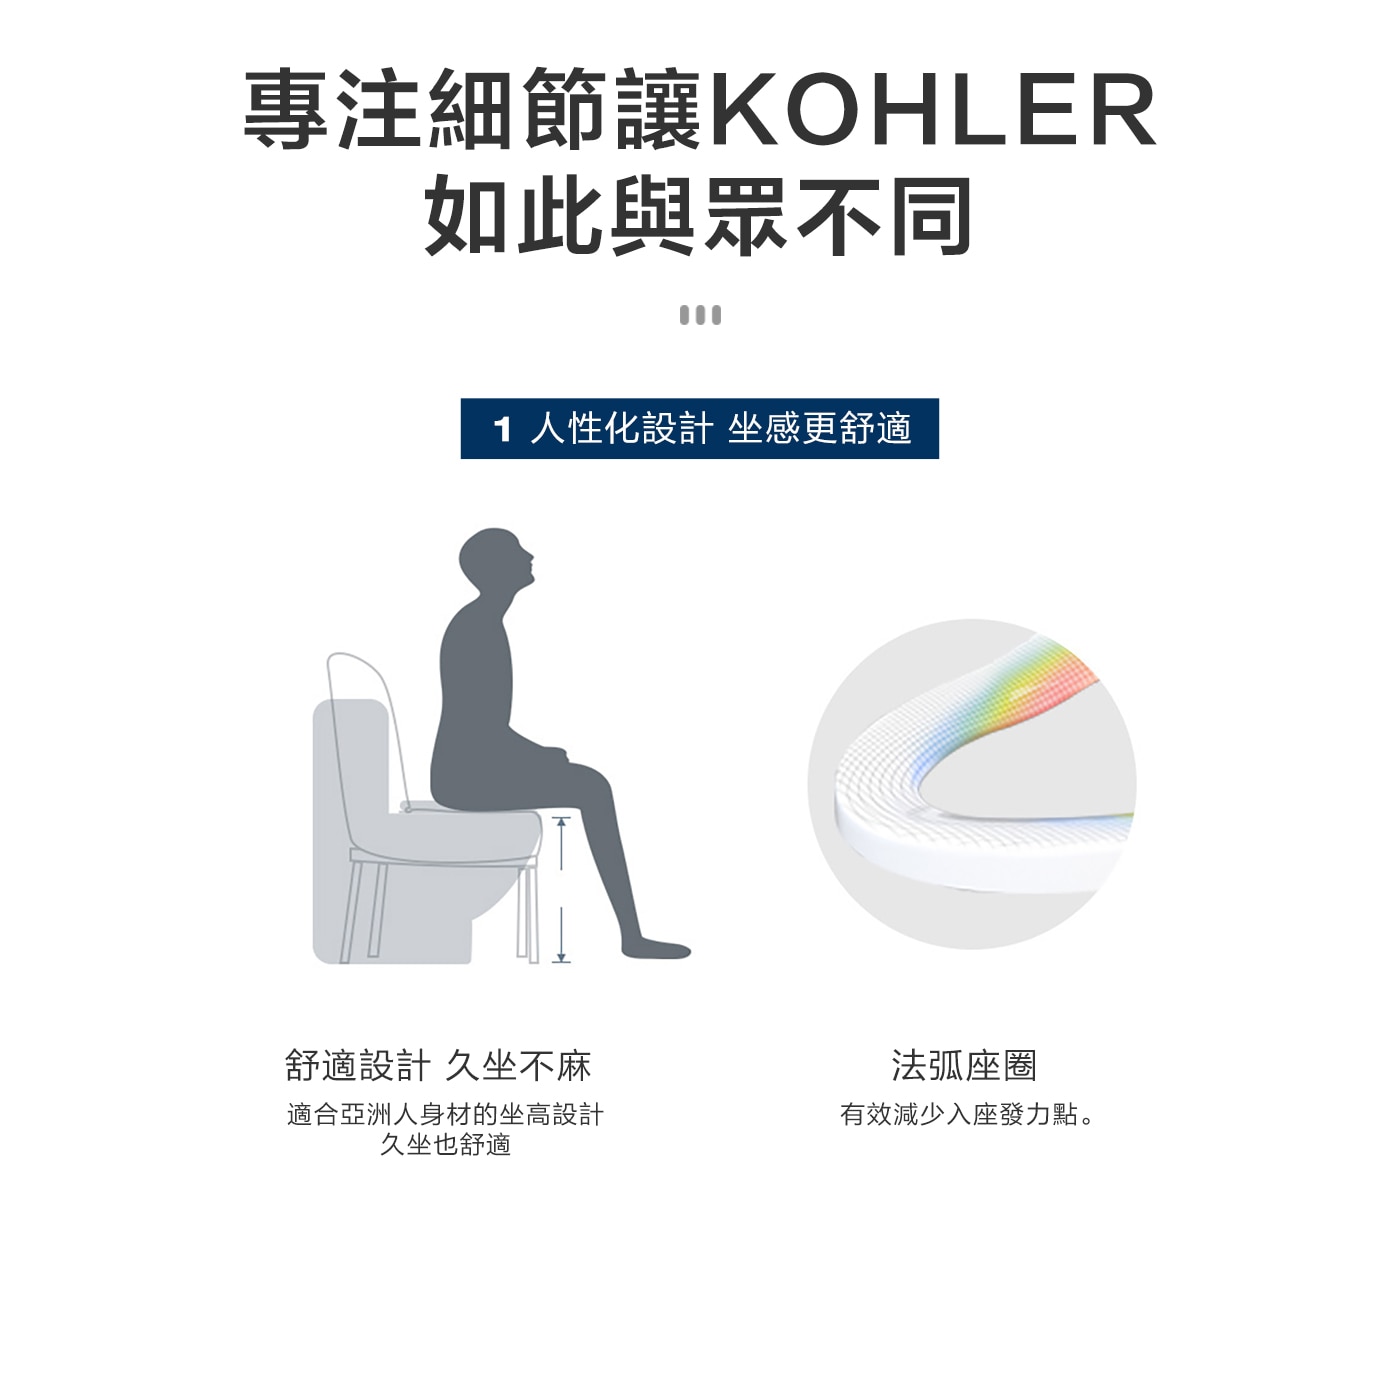 Kohler 虹吸式單體馬桶專注細節讓KOHLER如此與眾不同人性化設計坐感更舒適